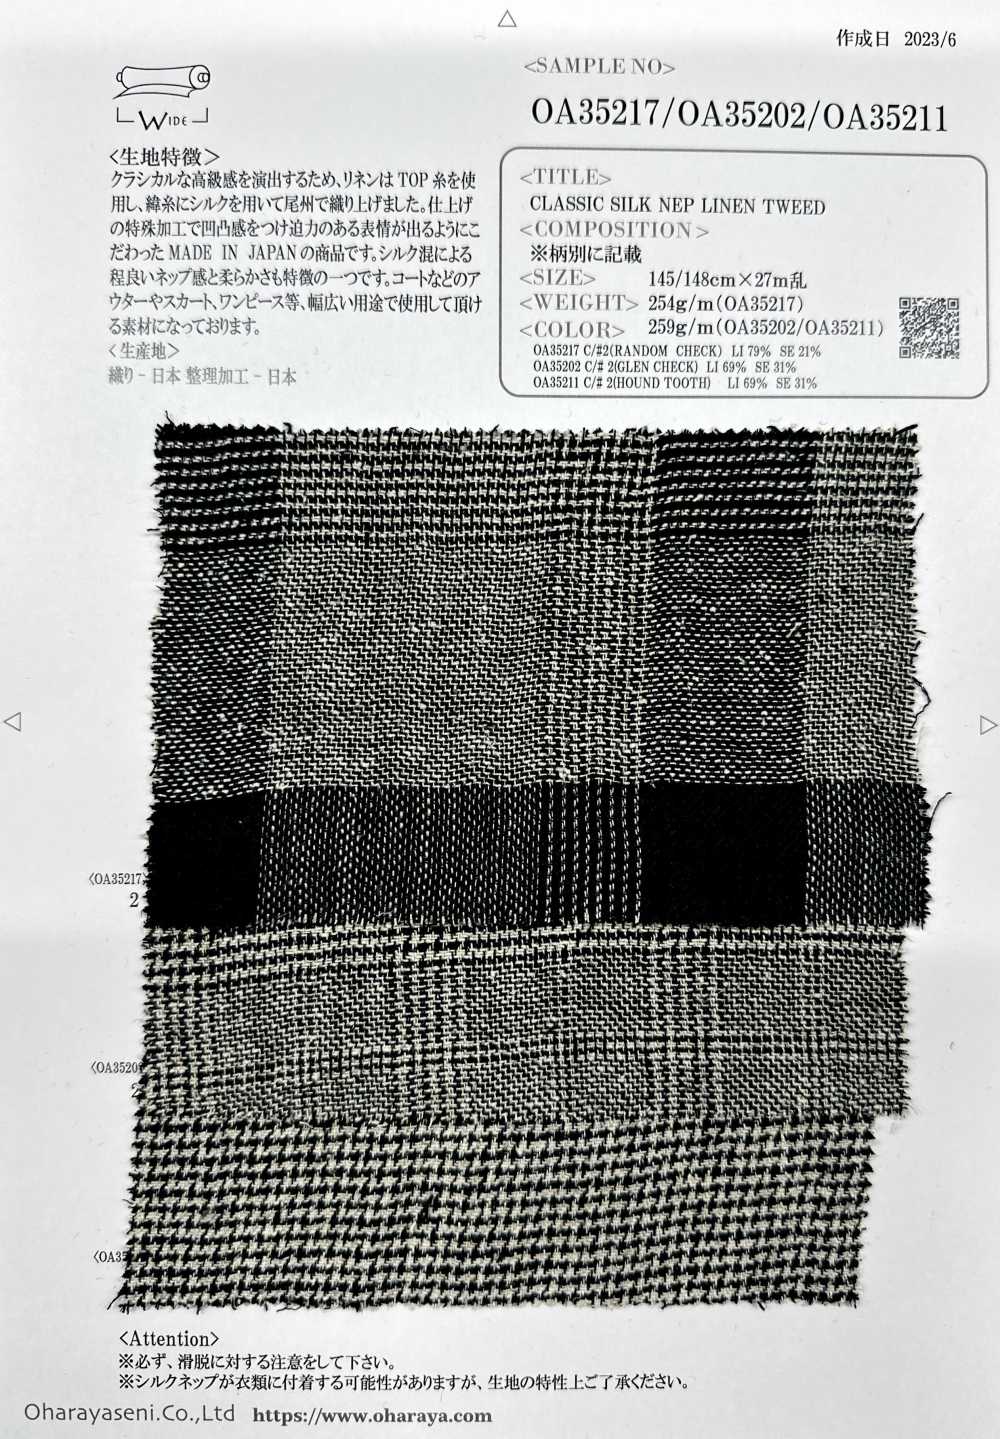 OA35217 LINHO CLÁSSICO NEP LINHO TWEED[Têxtil / Tecido] Oharayaseni